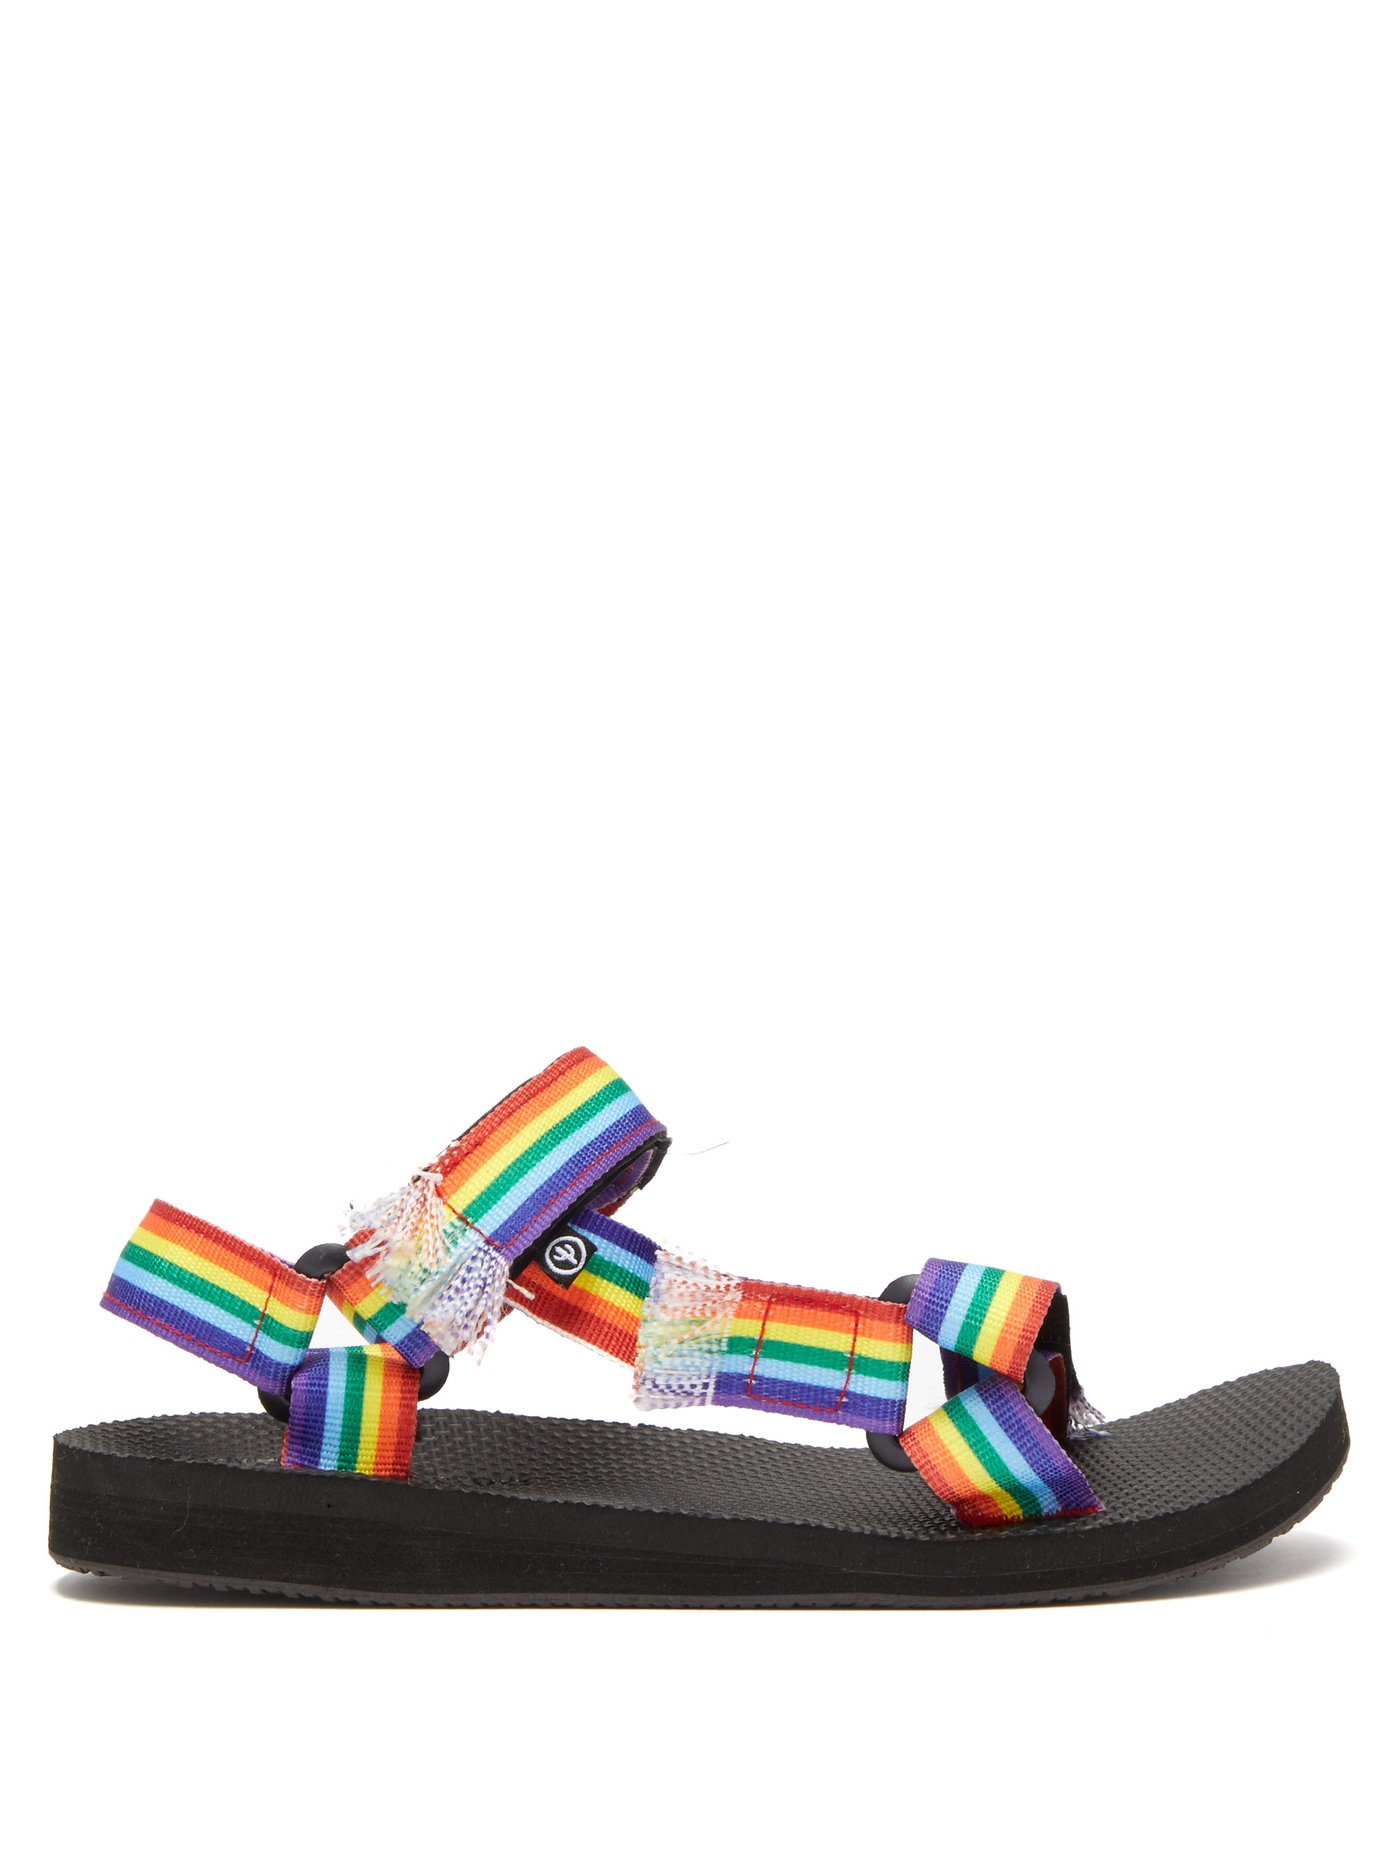 burberry rainbow sandals